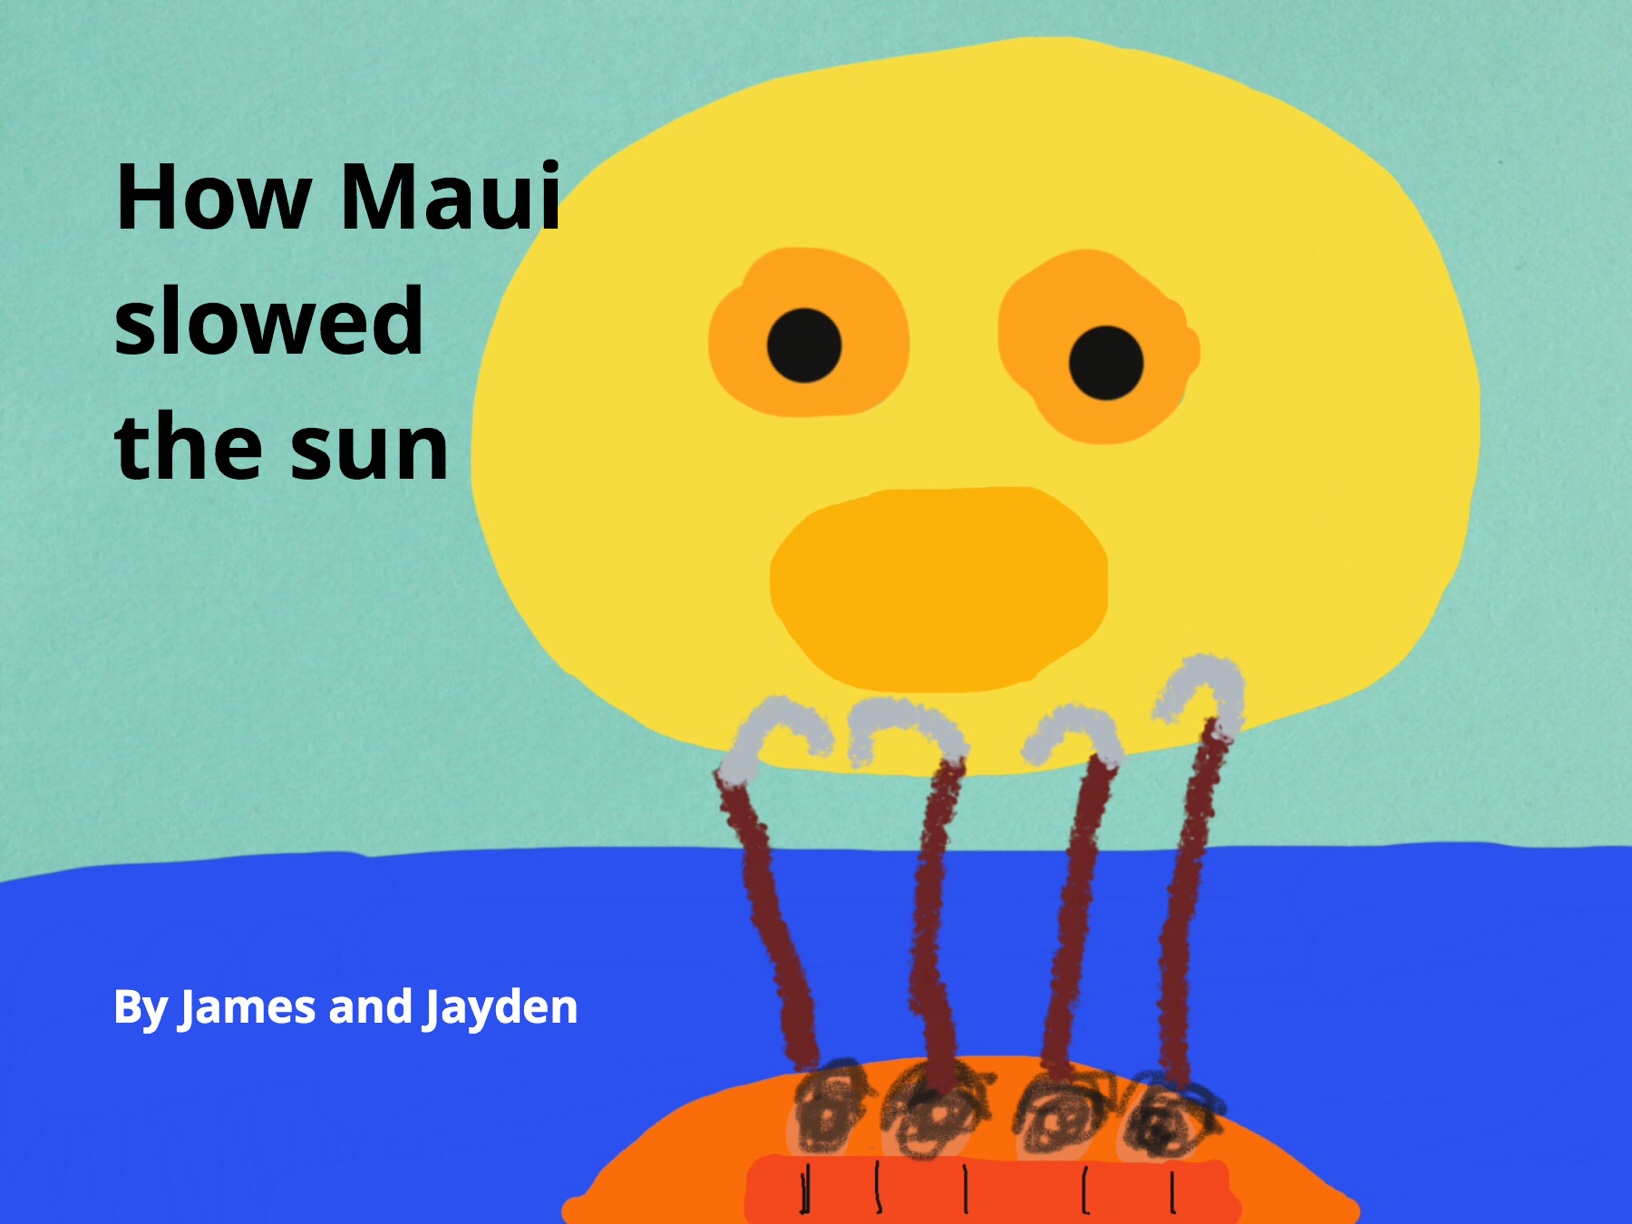 How Maui slowed the sun